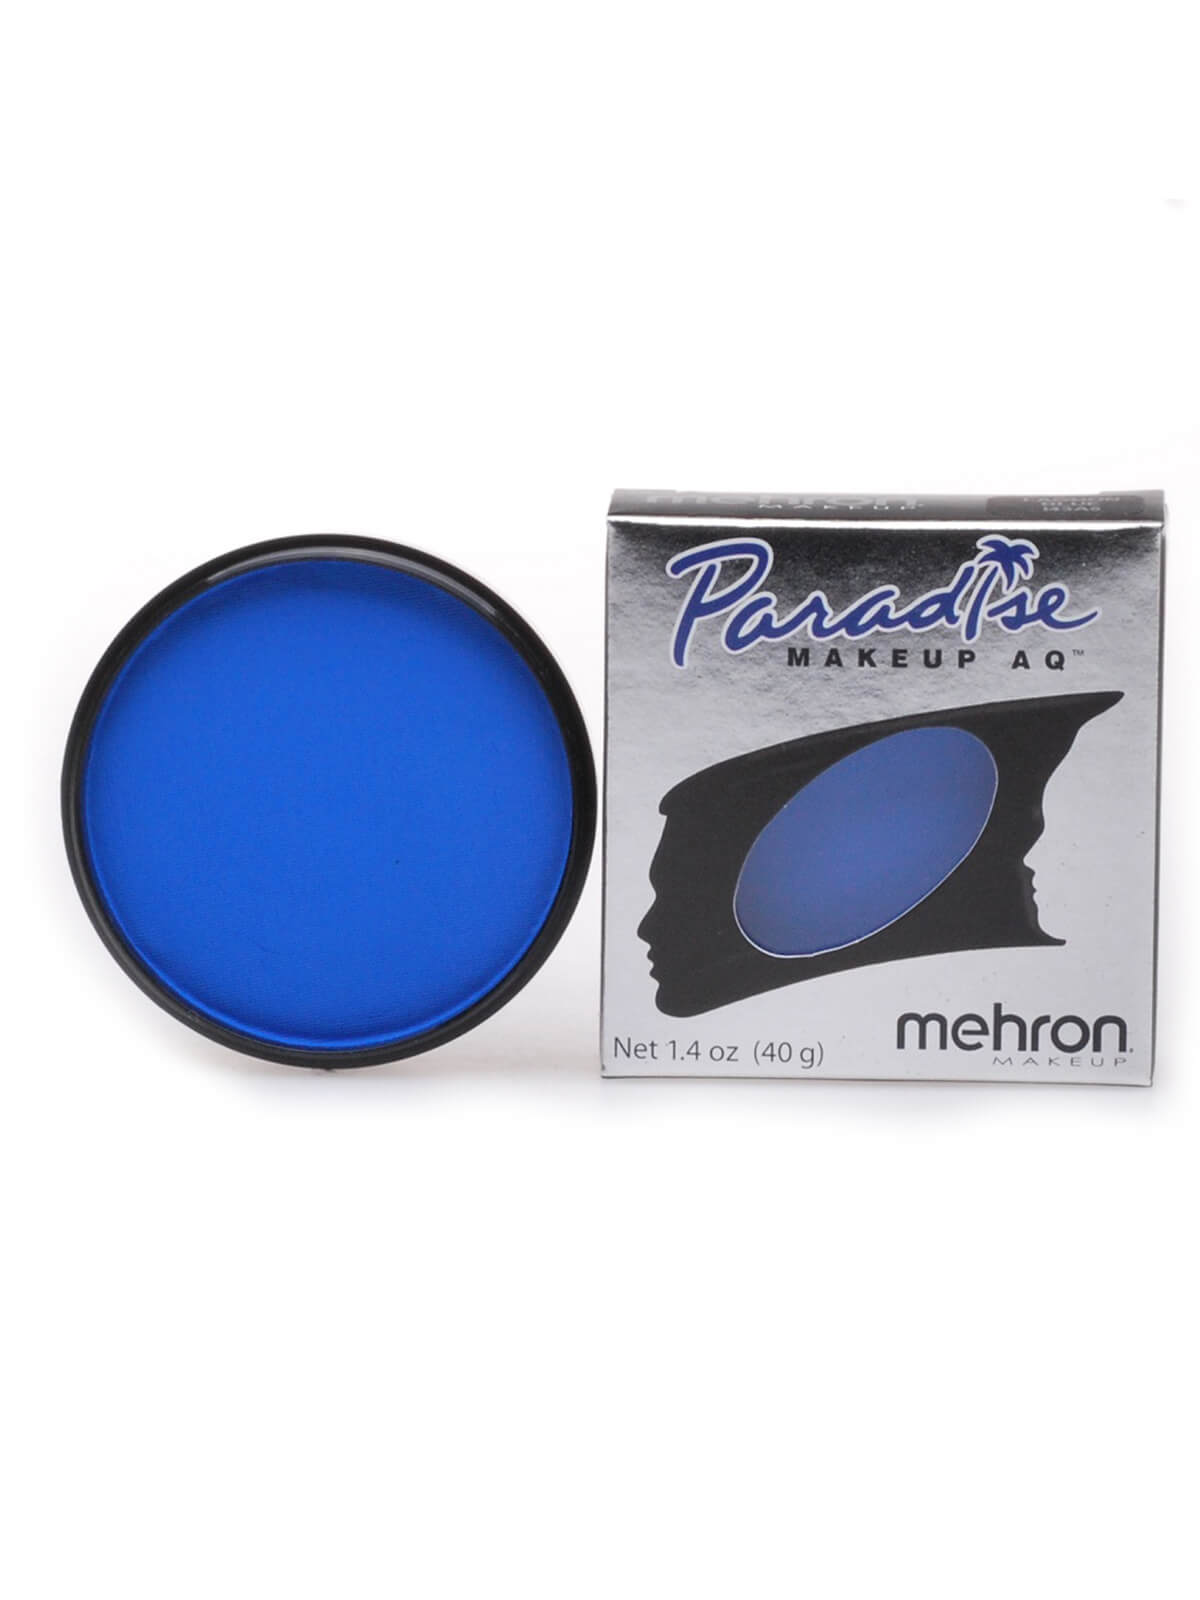 Mehron Paradise Makeup AQ - Tropical - Lagoon Blue